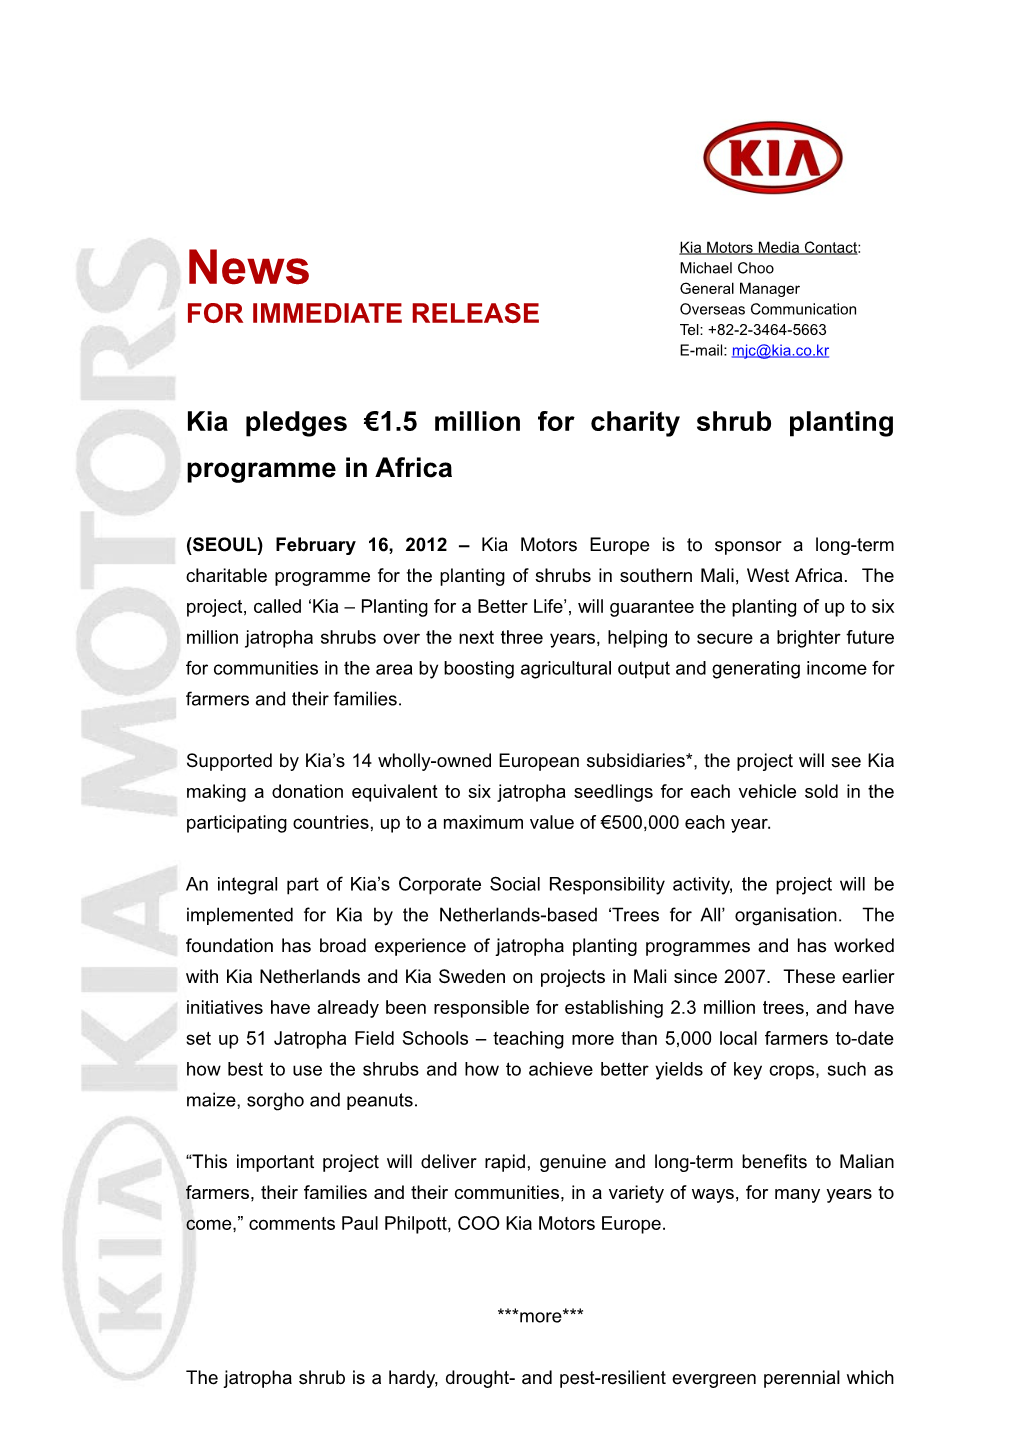 Kia Pledges 1.5 Million for Charity Shrub Planting Programme in Africa